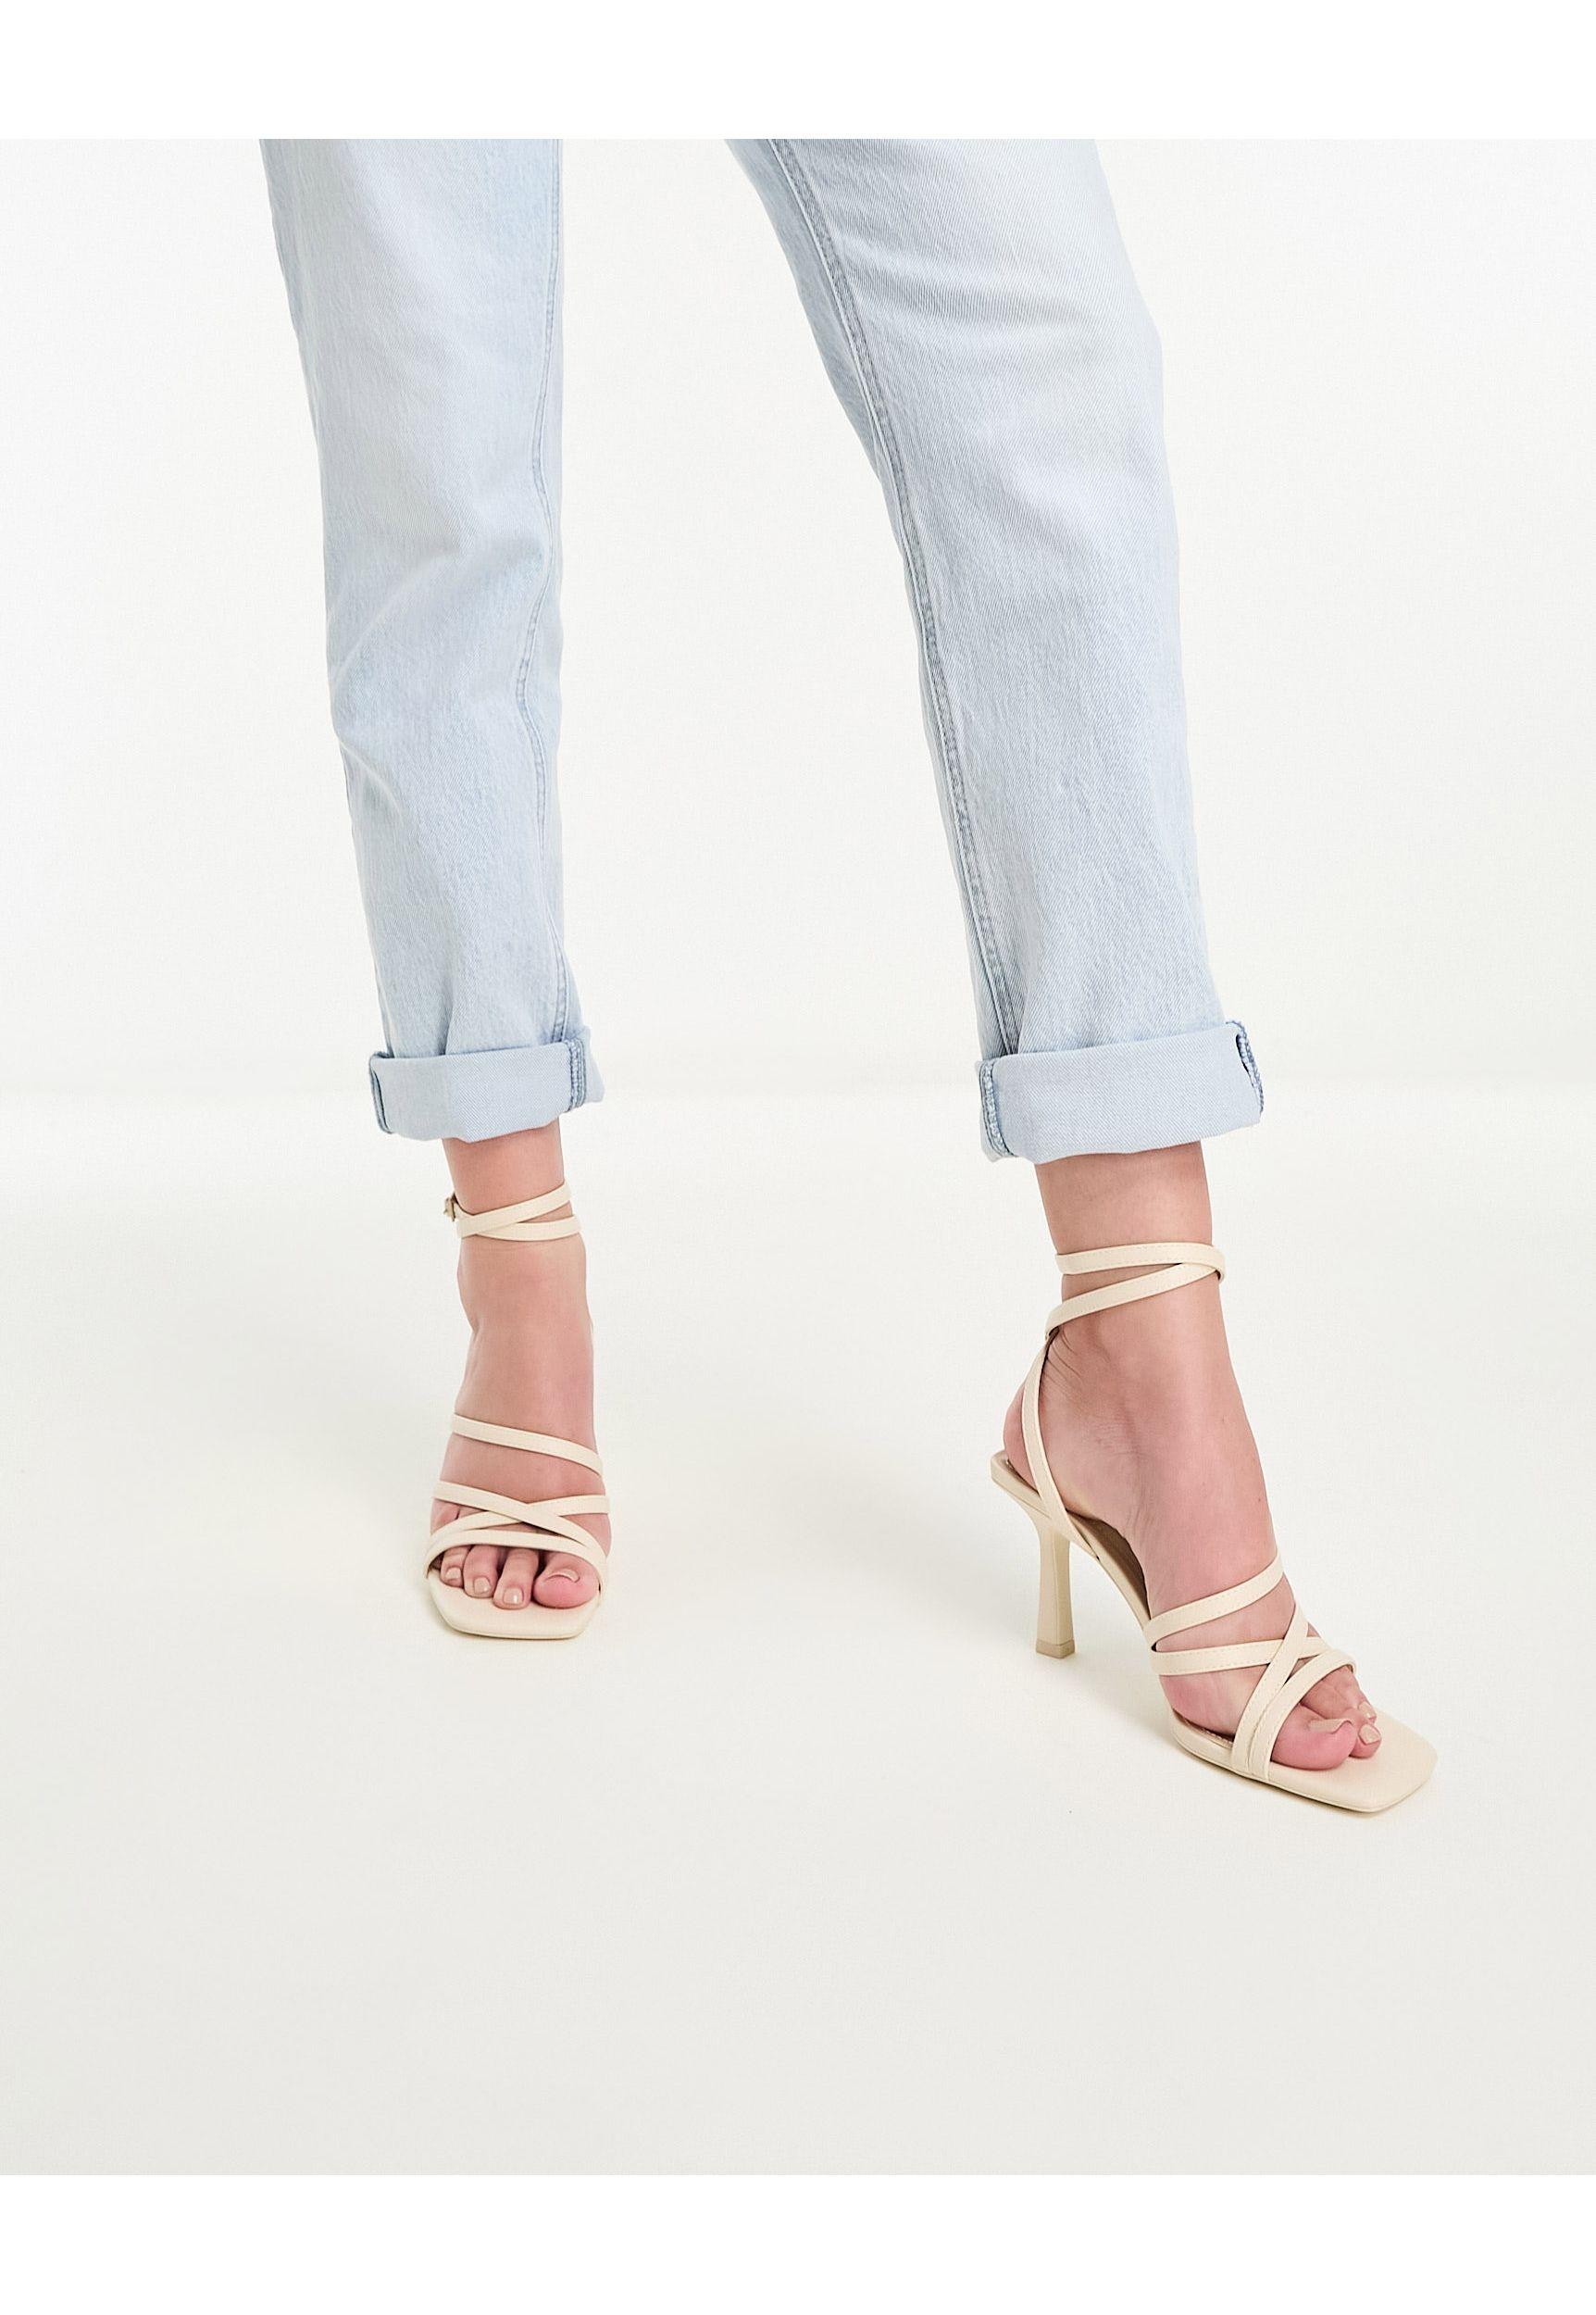 Bershka Multi Strap Heeled Sandals in White | Lyst